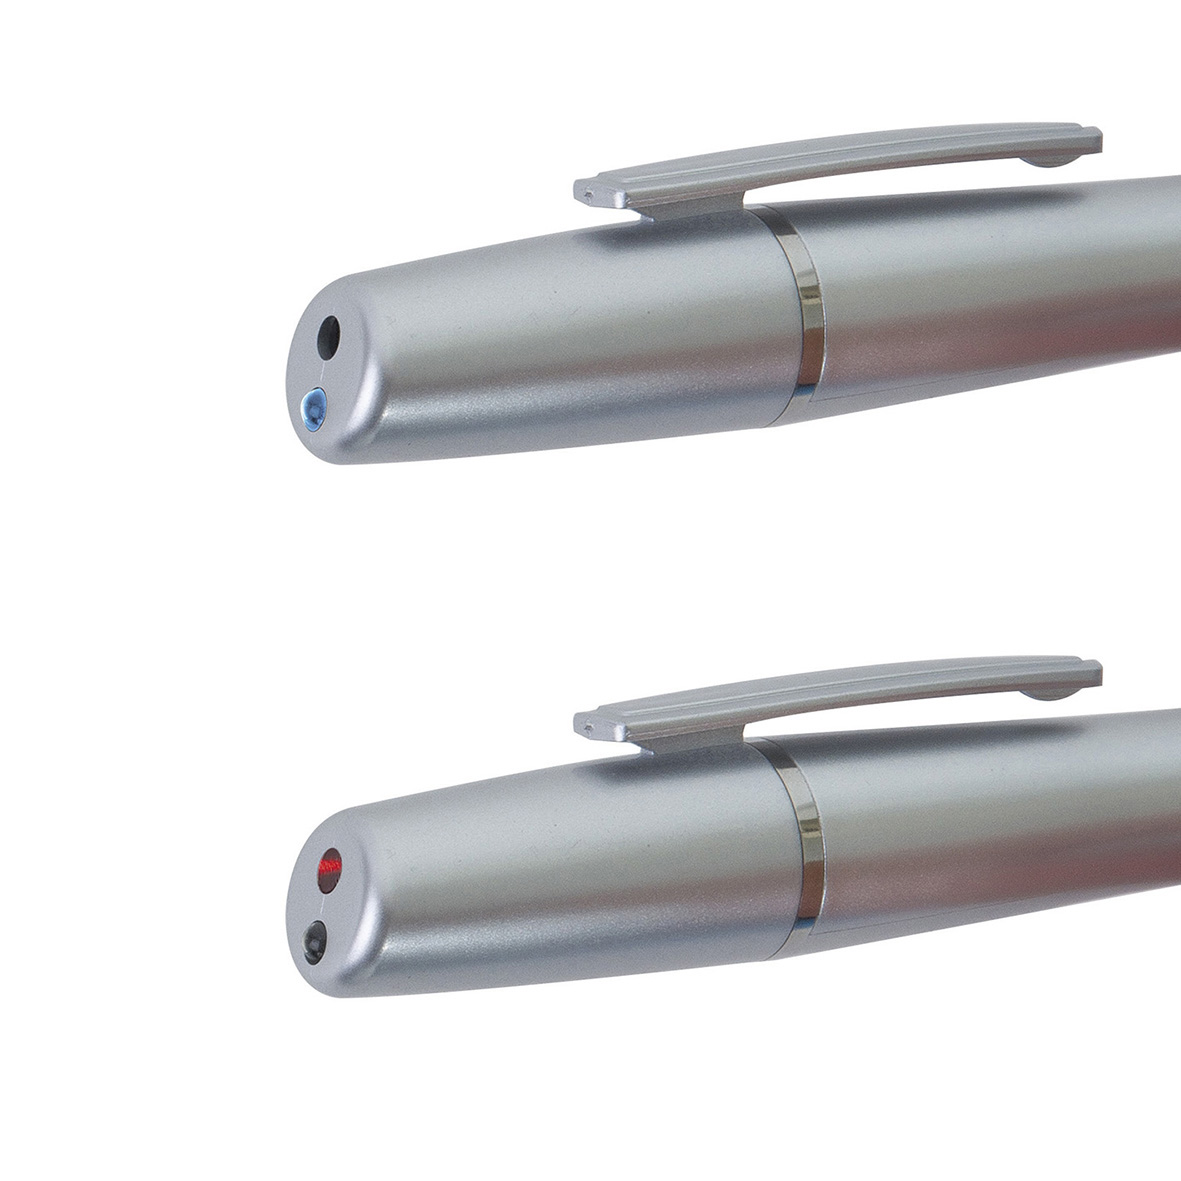 Stylo bille publicitaire laser/torche cote1403 - techno - stylo multifonction